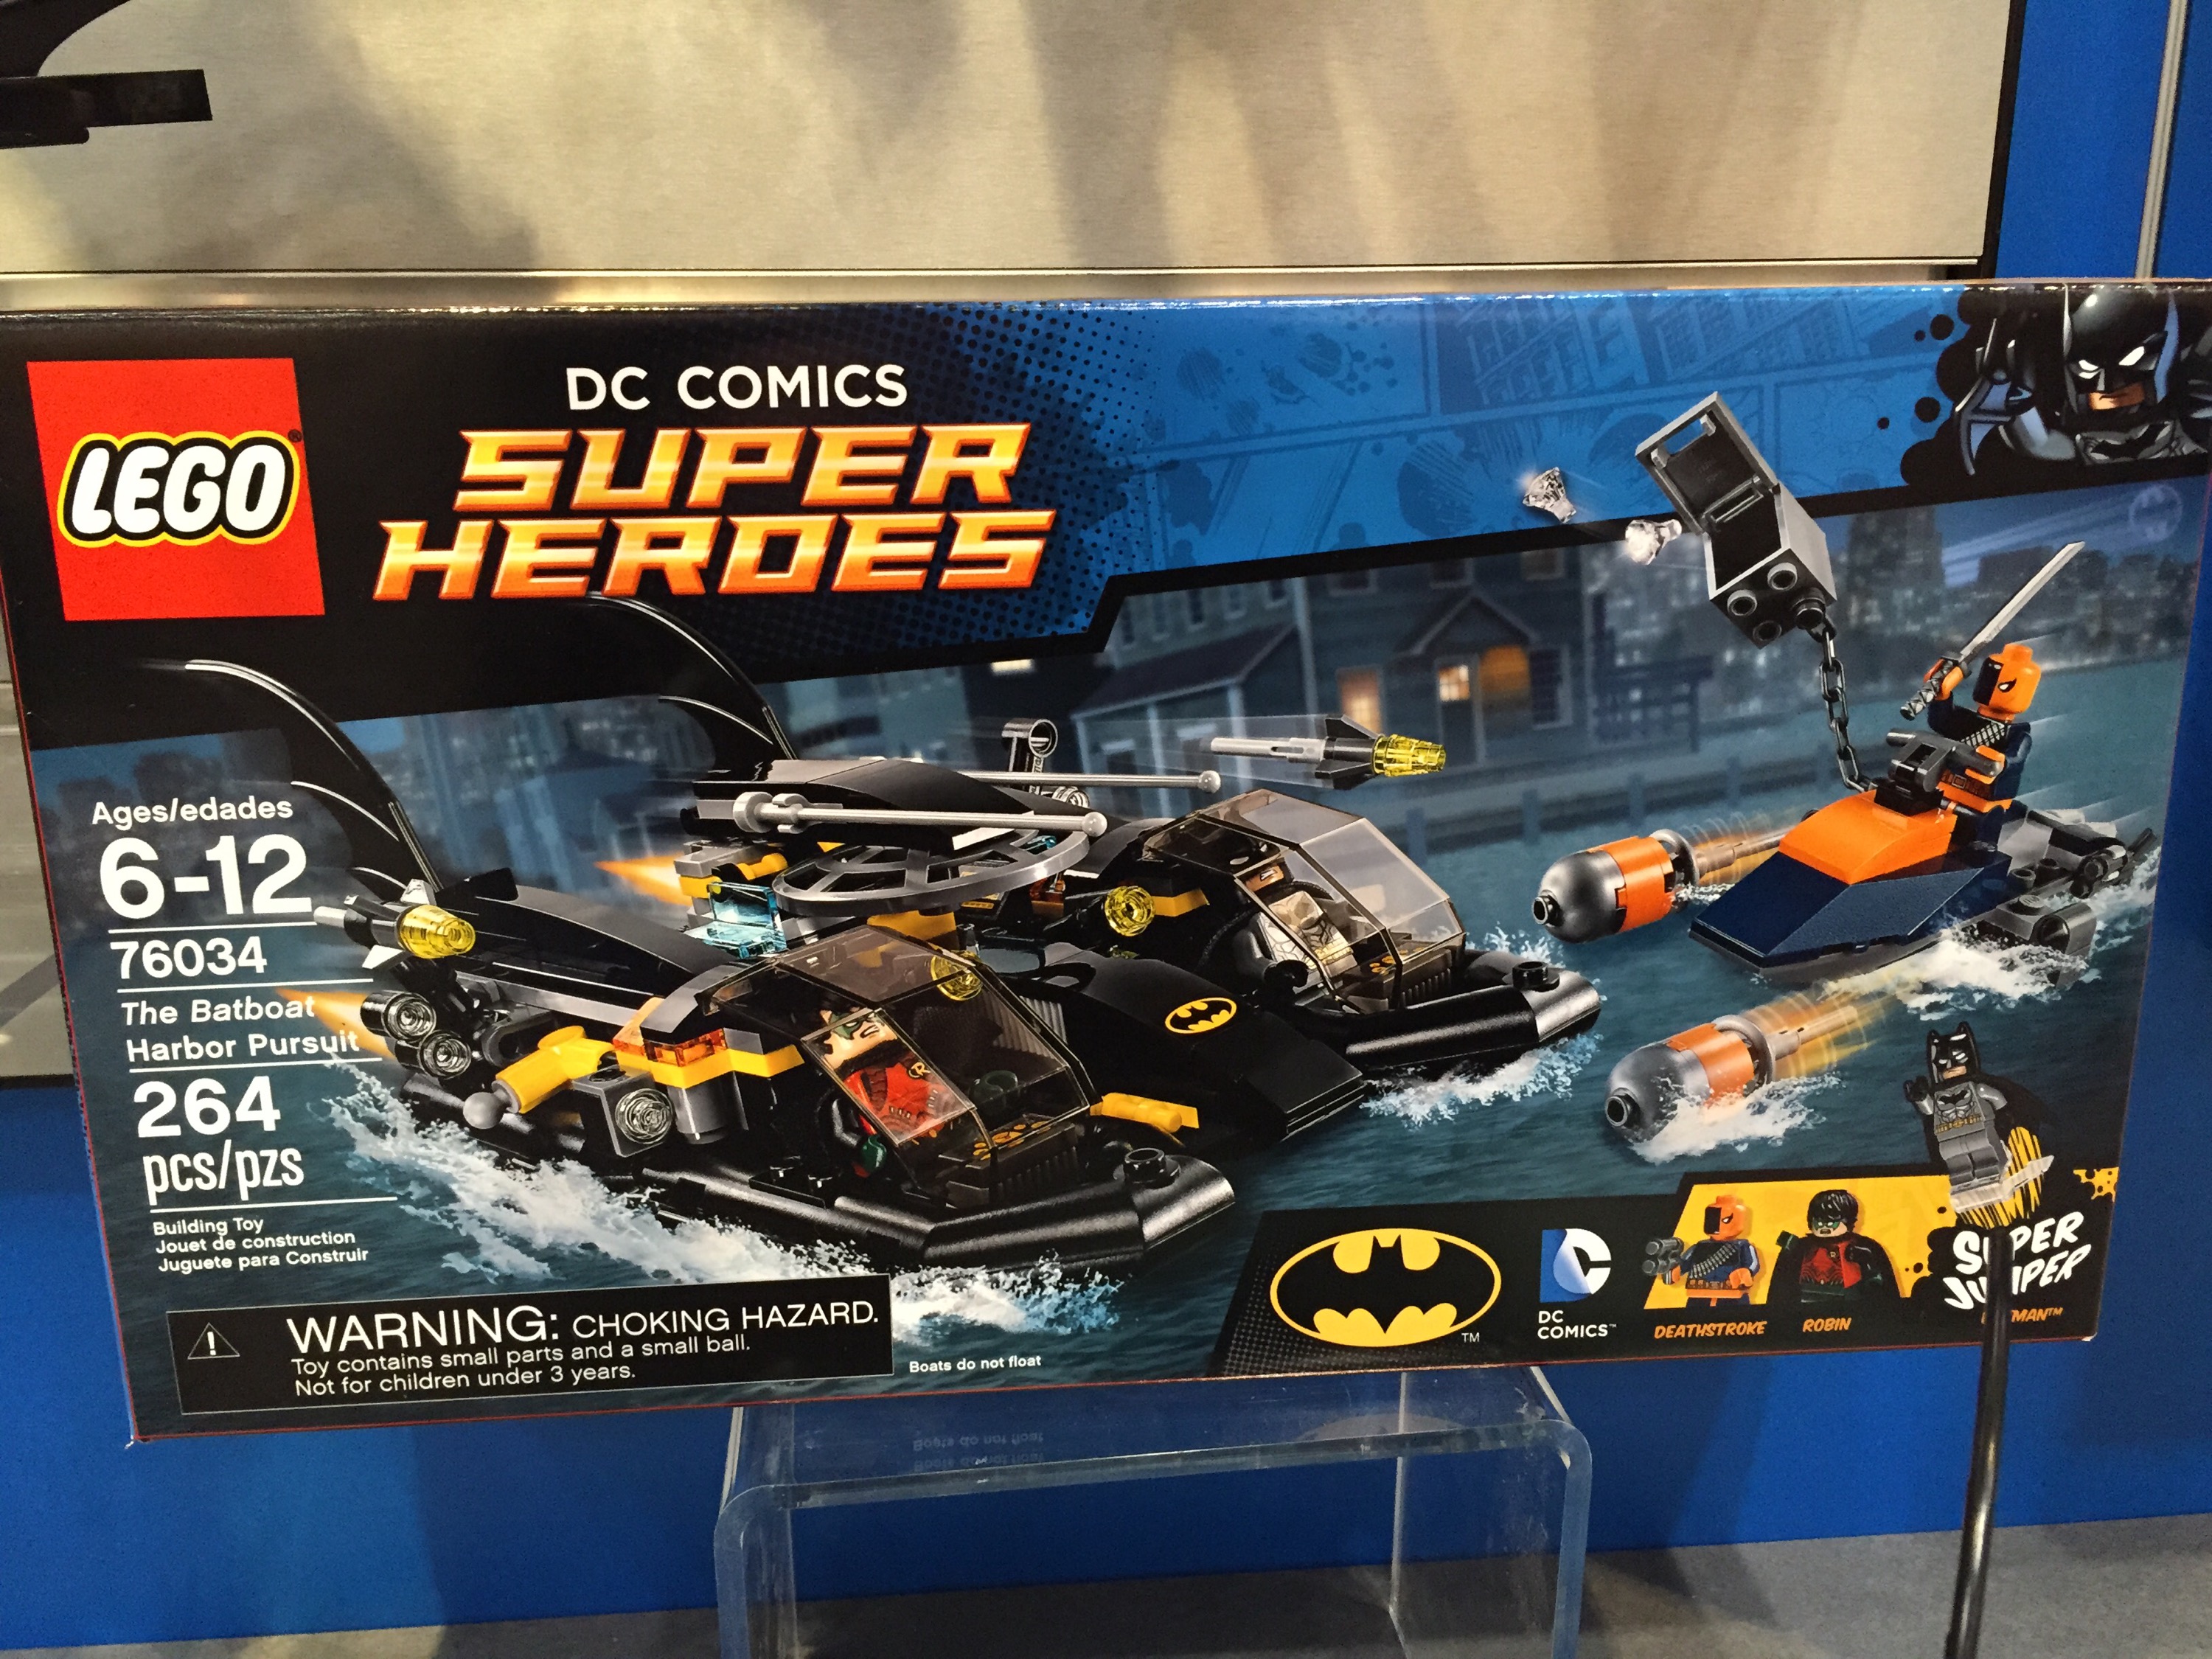 LEGO Batman Batboat Harbor Pursuit Set Photos! - Bricks and Bloks